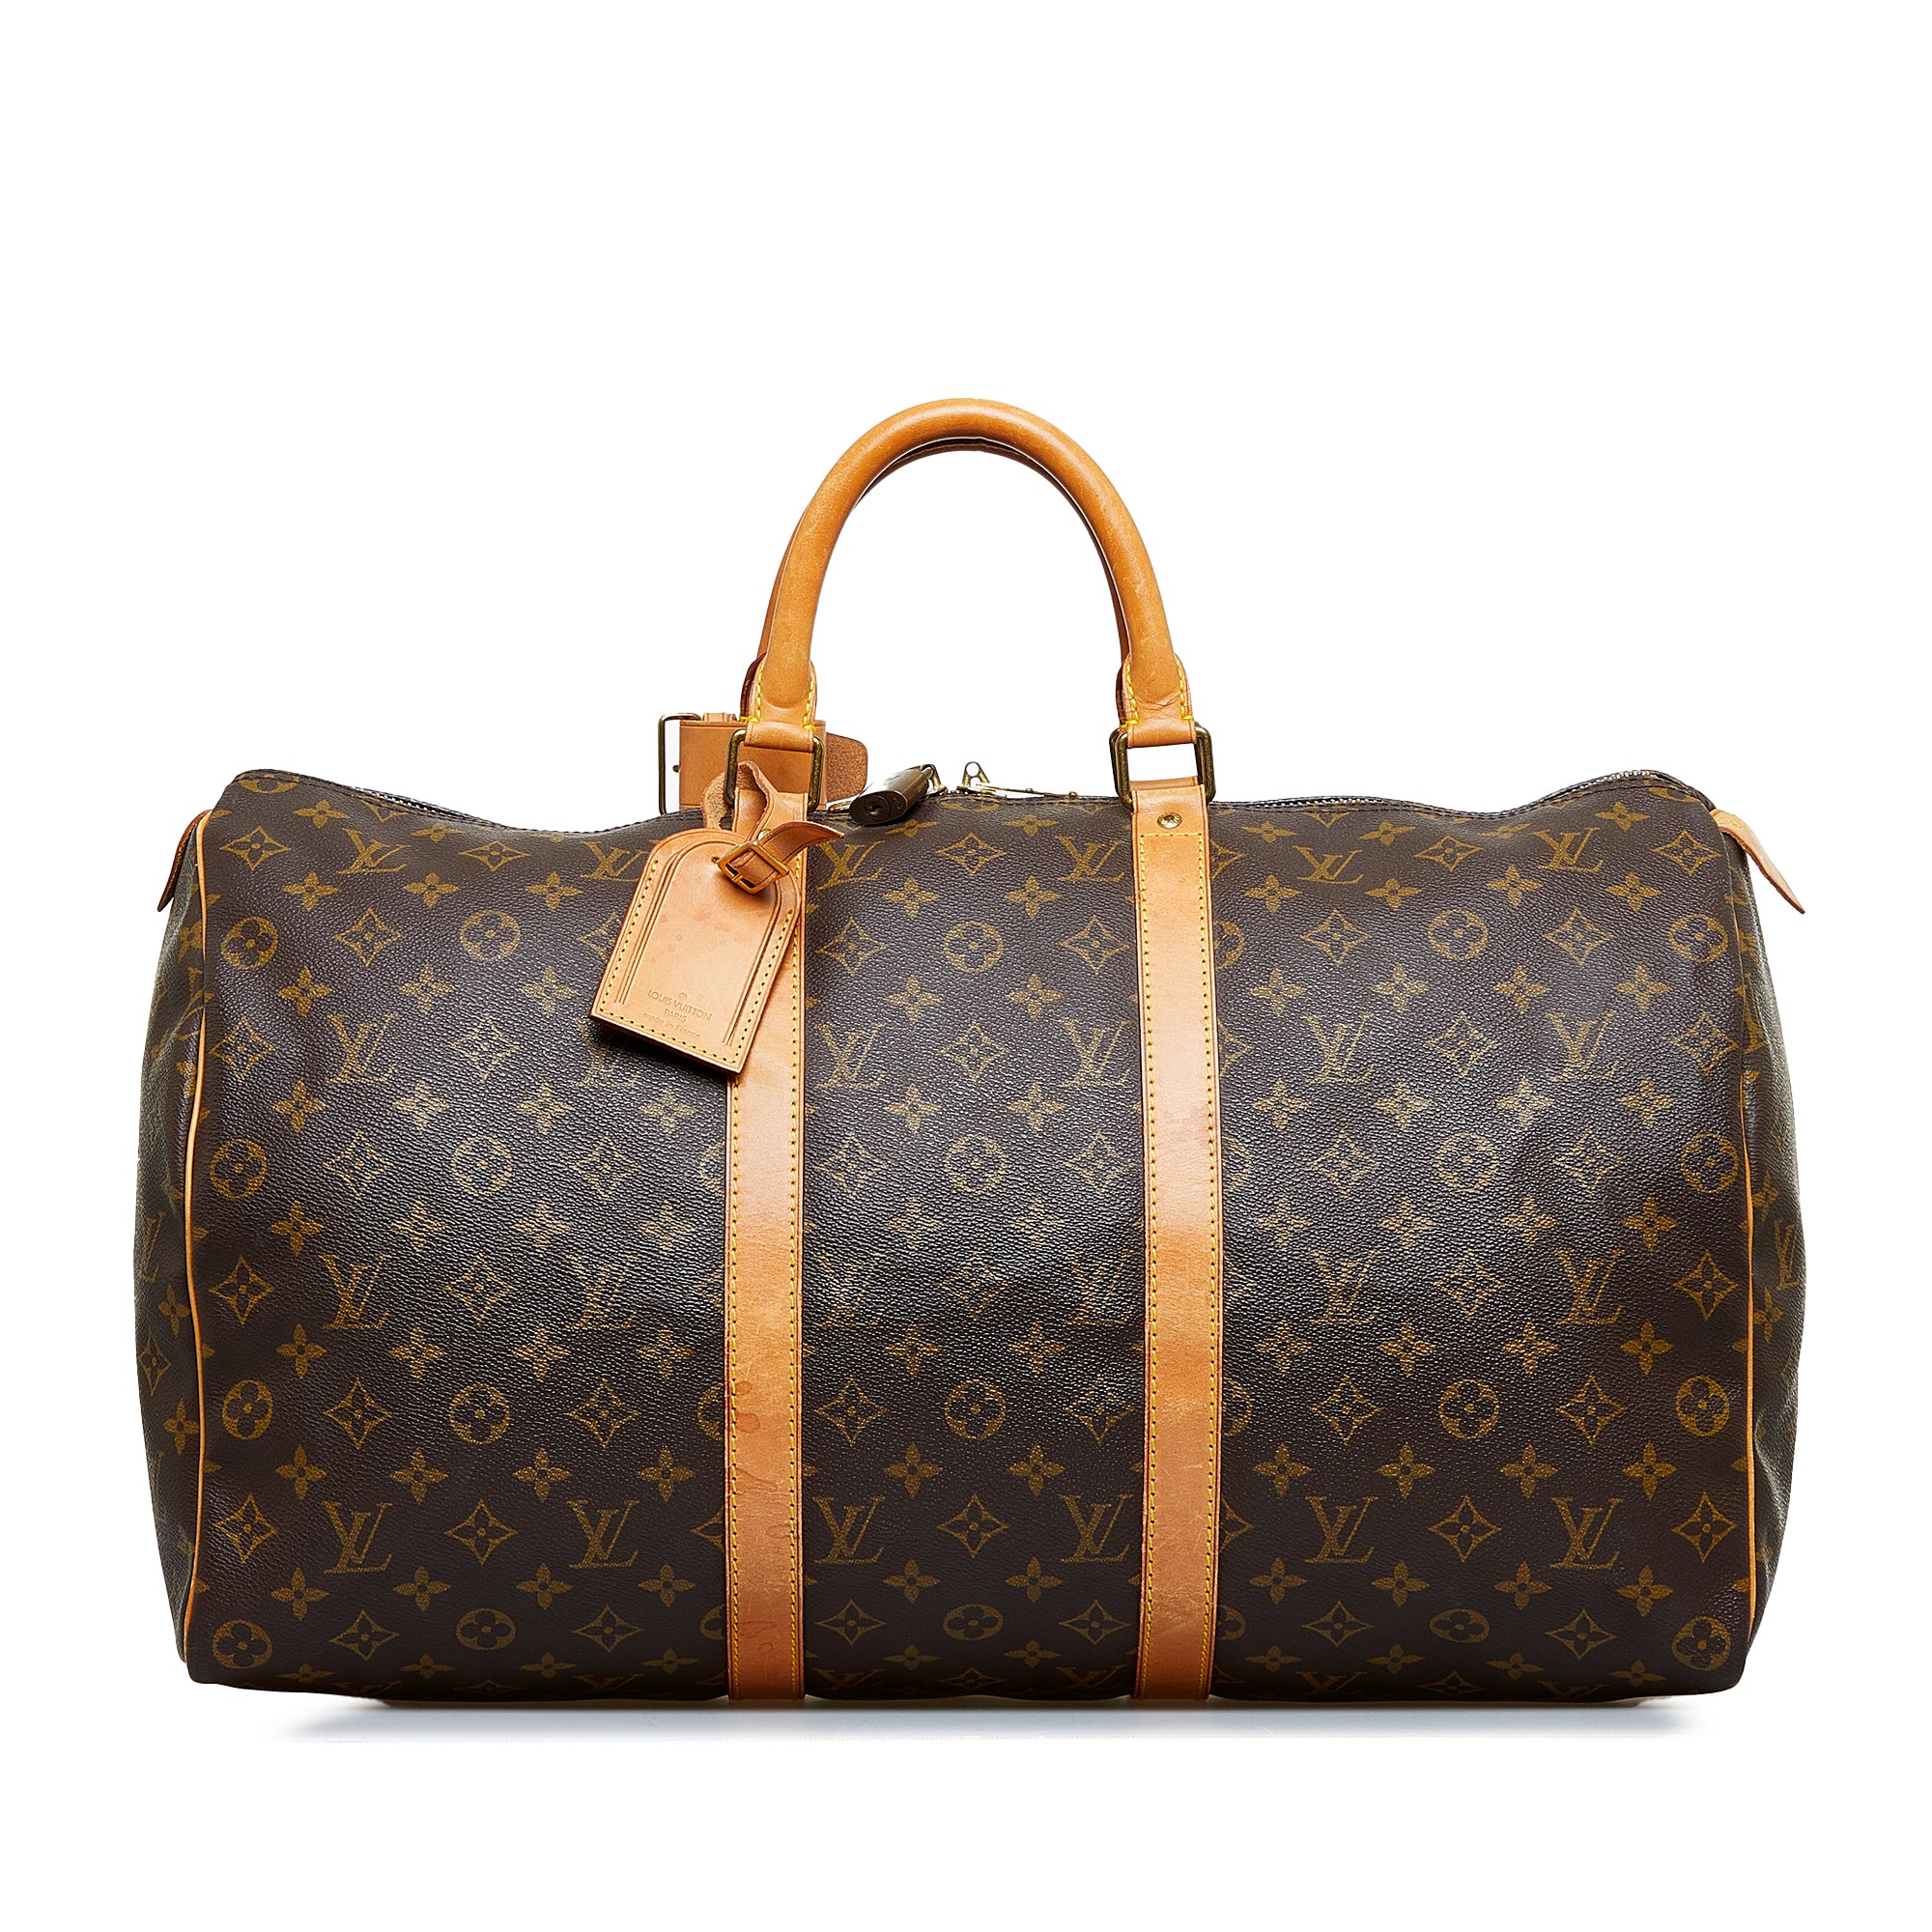 Louis Vuitton Beige Patent Leather Rolled Handle Monogram Interior Pocket Bag